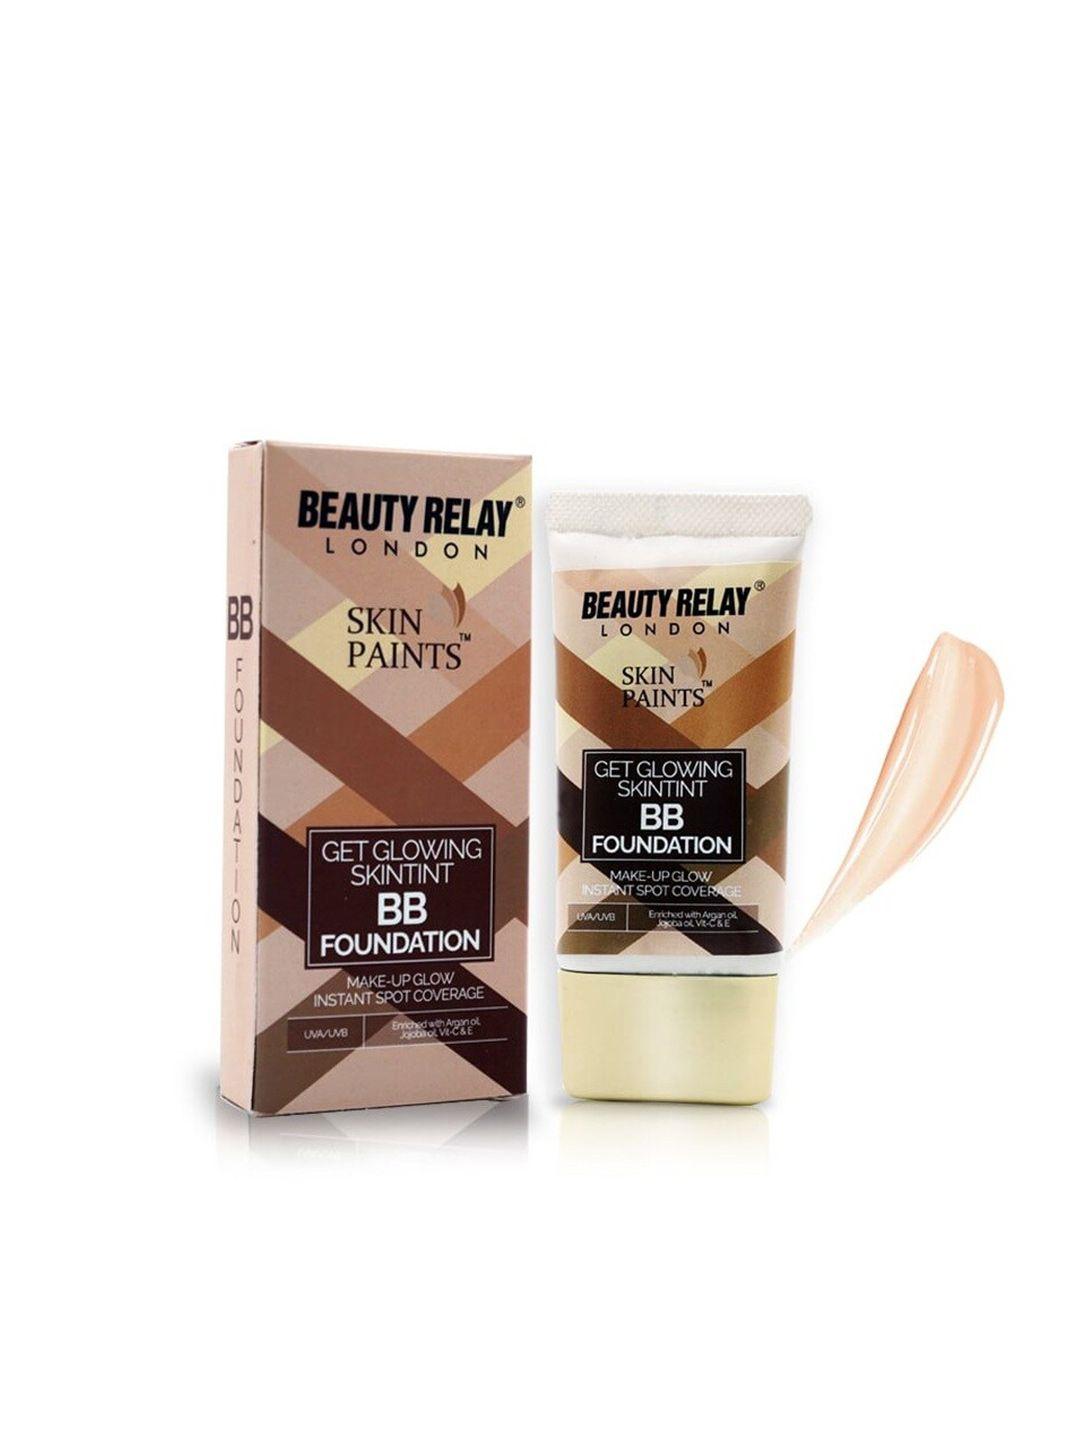 beautyrelay london skin paints iconic hd foundation 30ml - sun beige 310